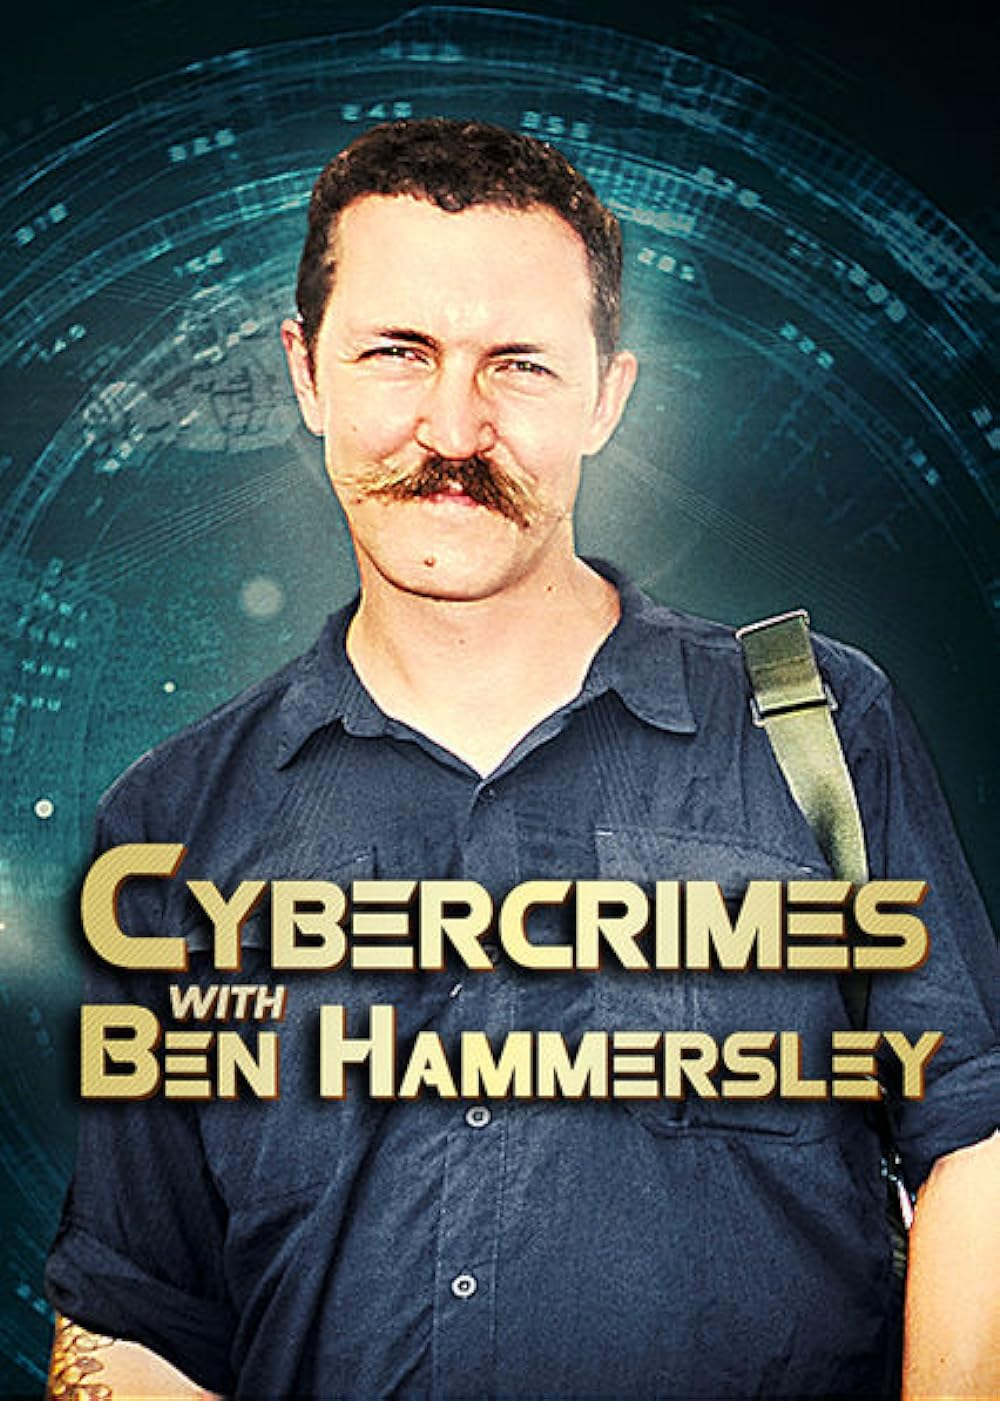 Cybercrimes with Ben Hammersley documentary